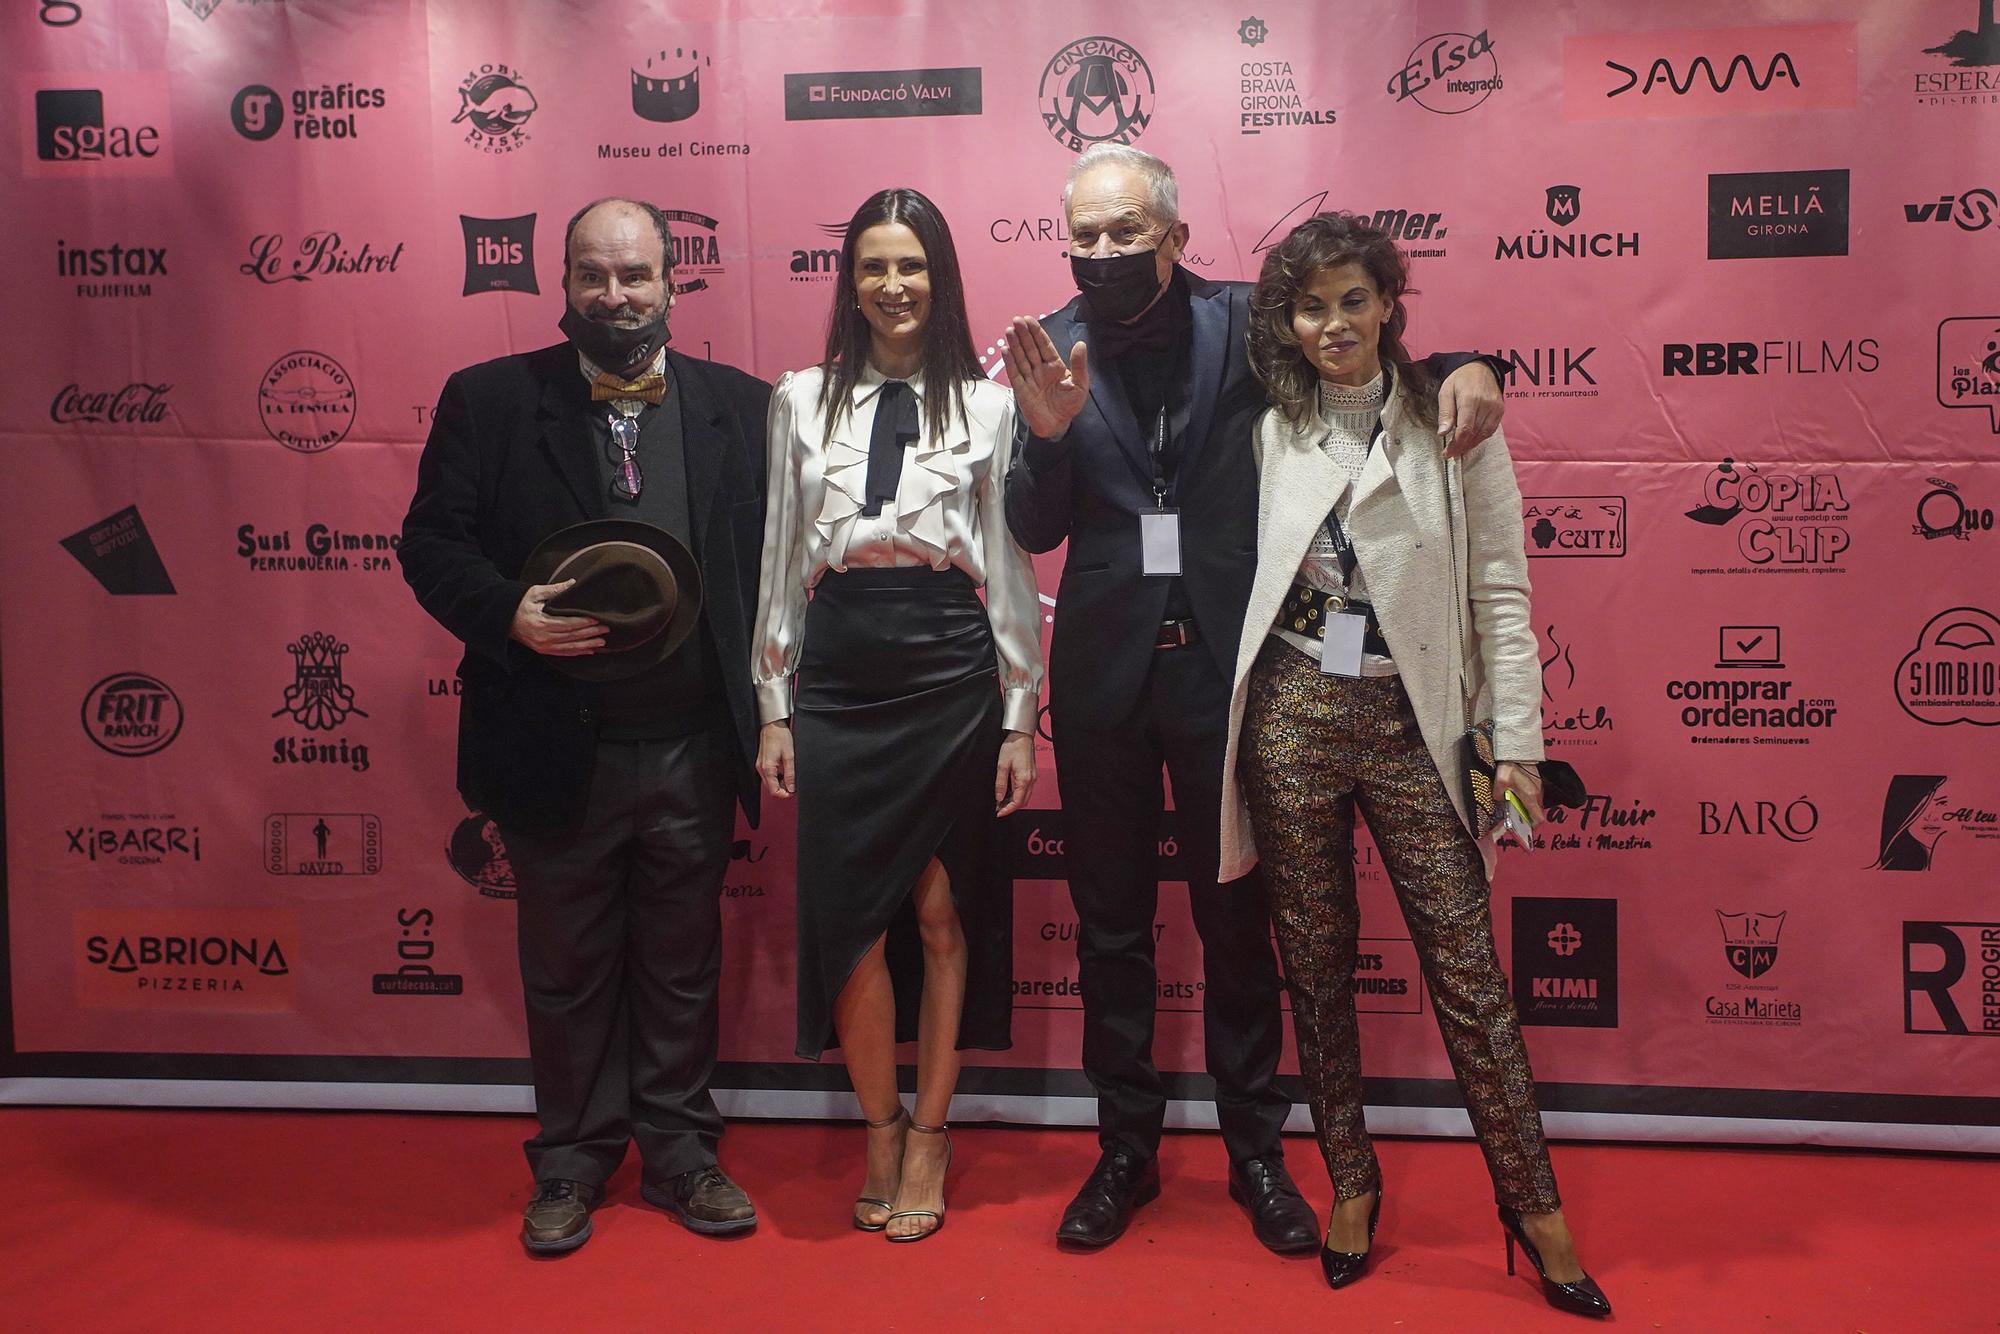 Tret de sortida del 33è Festival de Cinema de Girona